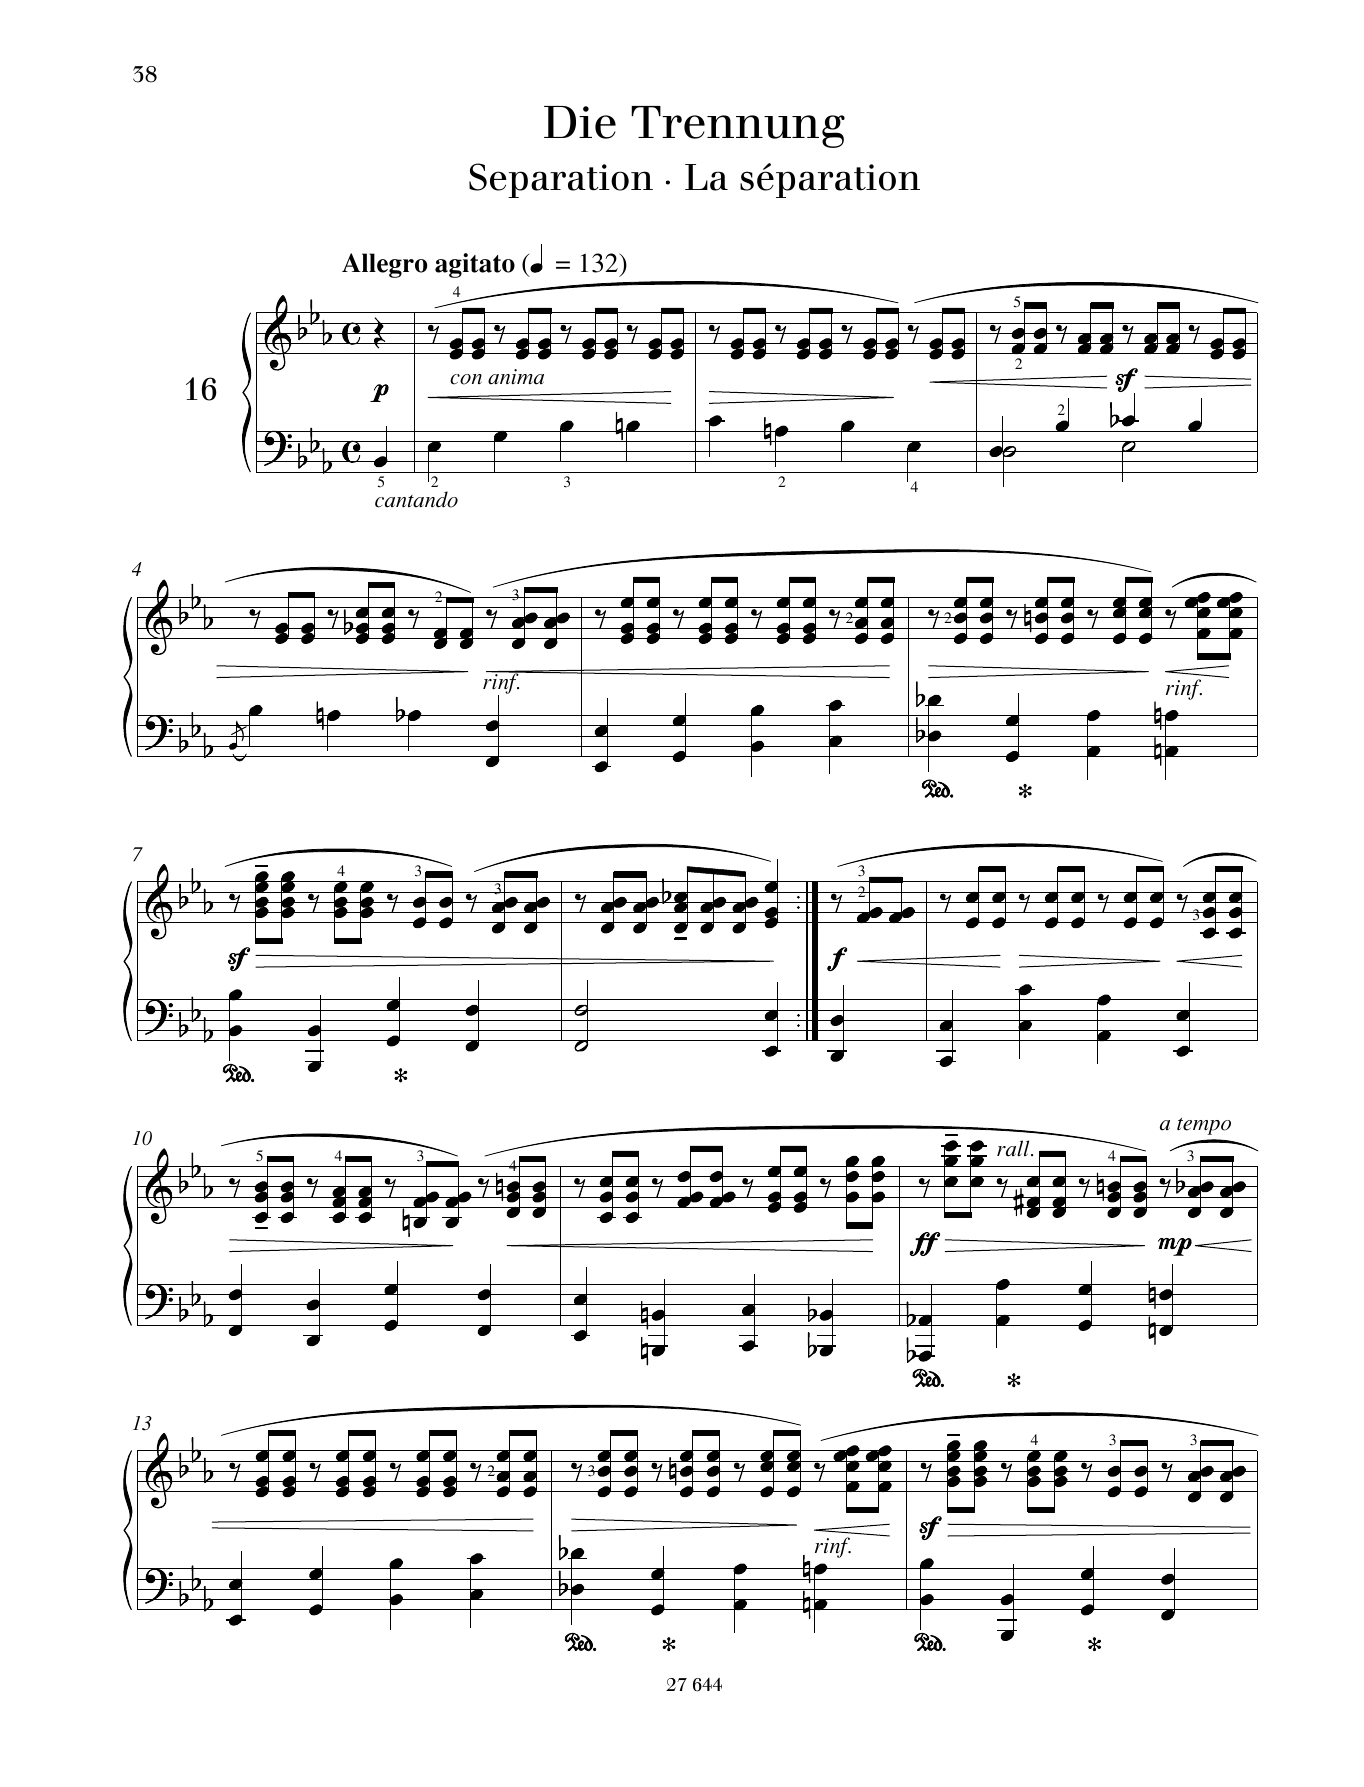 Monika Twelsiek Separation Sheet Music Notes & Chords for Piano Solo - Download or Print PDF